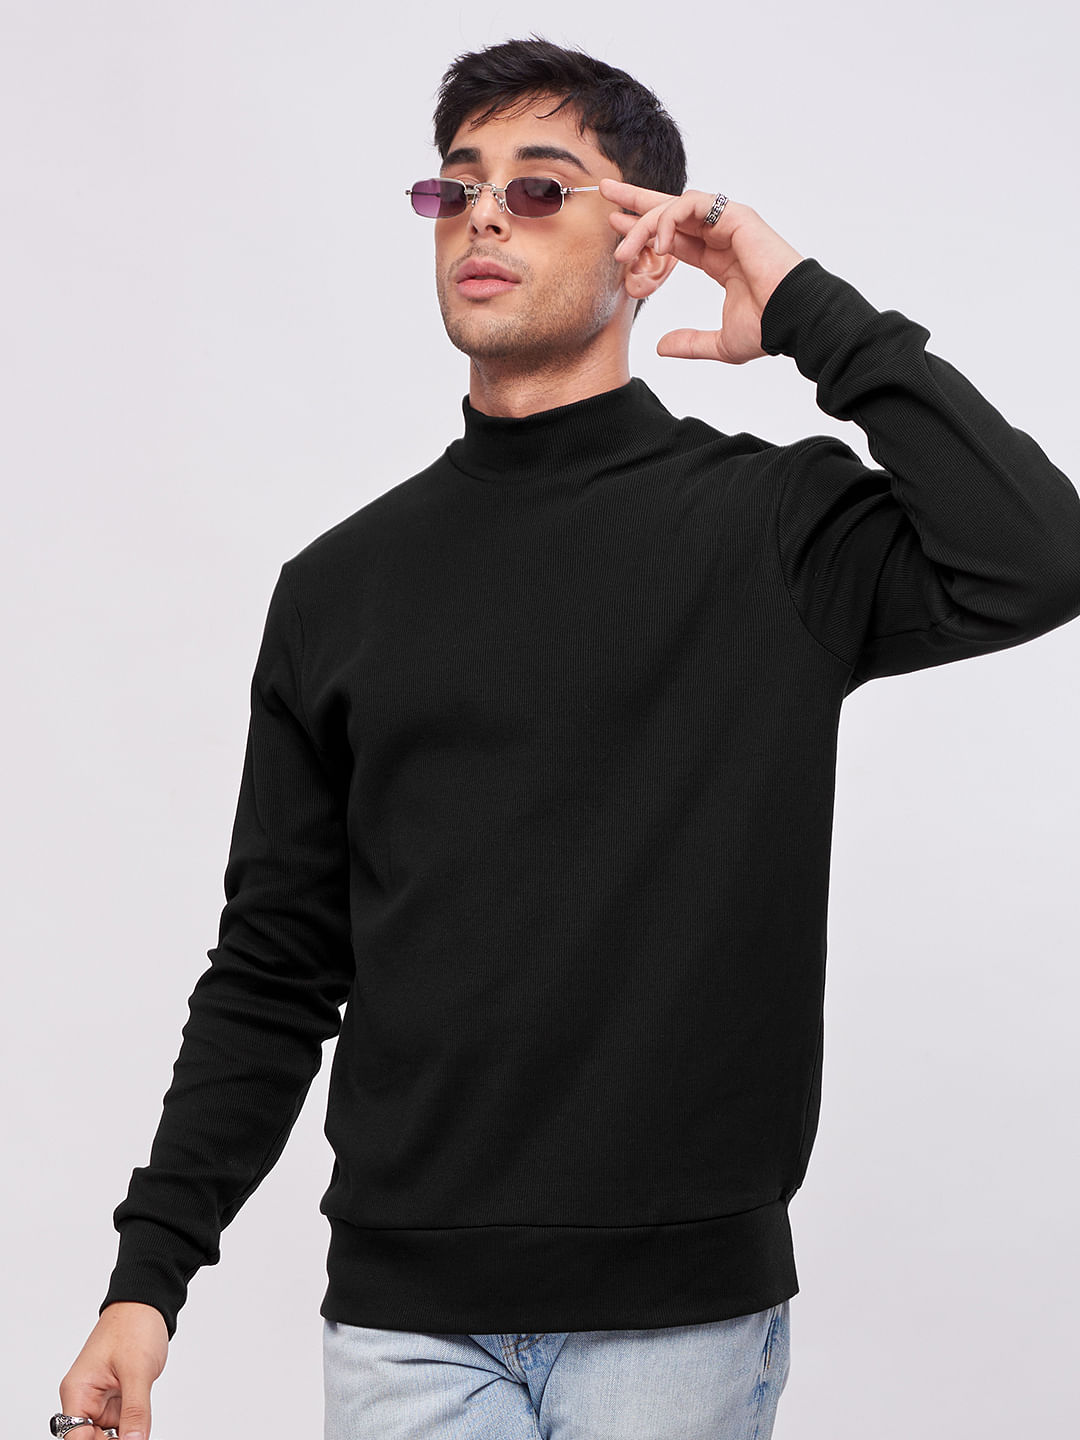 discount 99% Black M Primark jumper MEN FASHION Jumpers & Sweatshirts Basic 